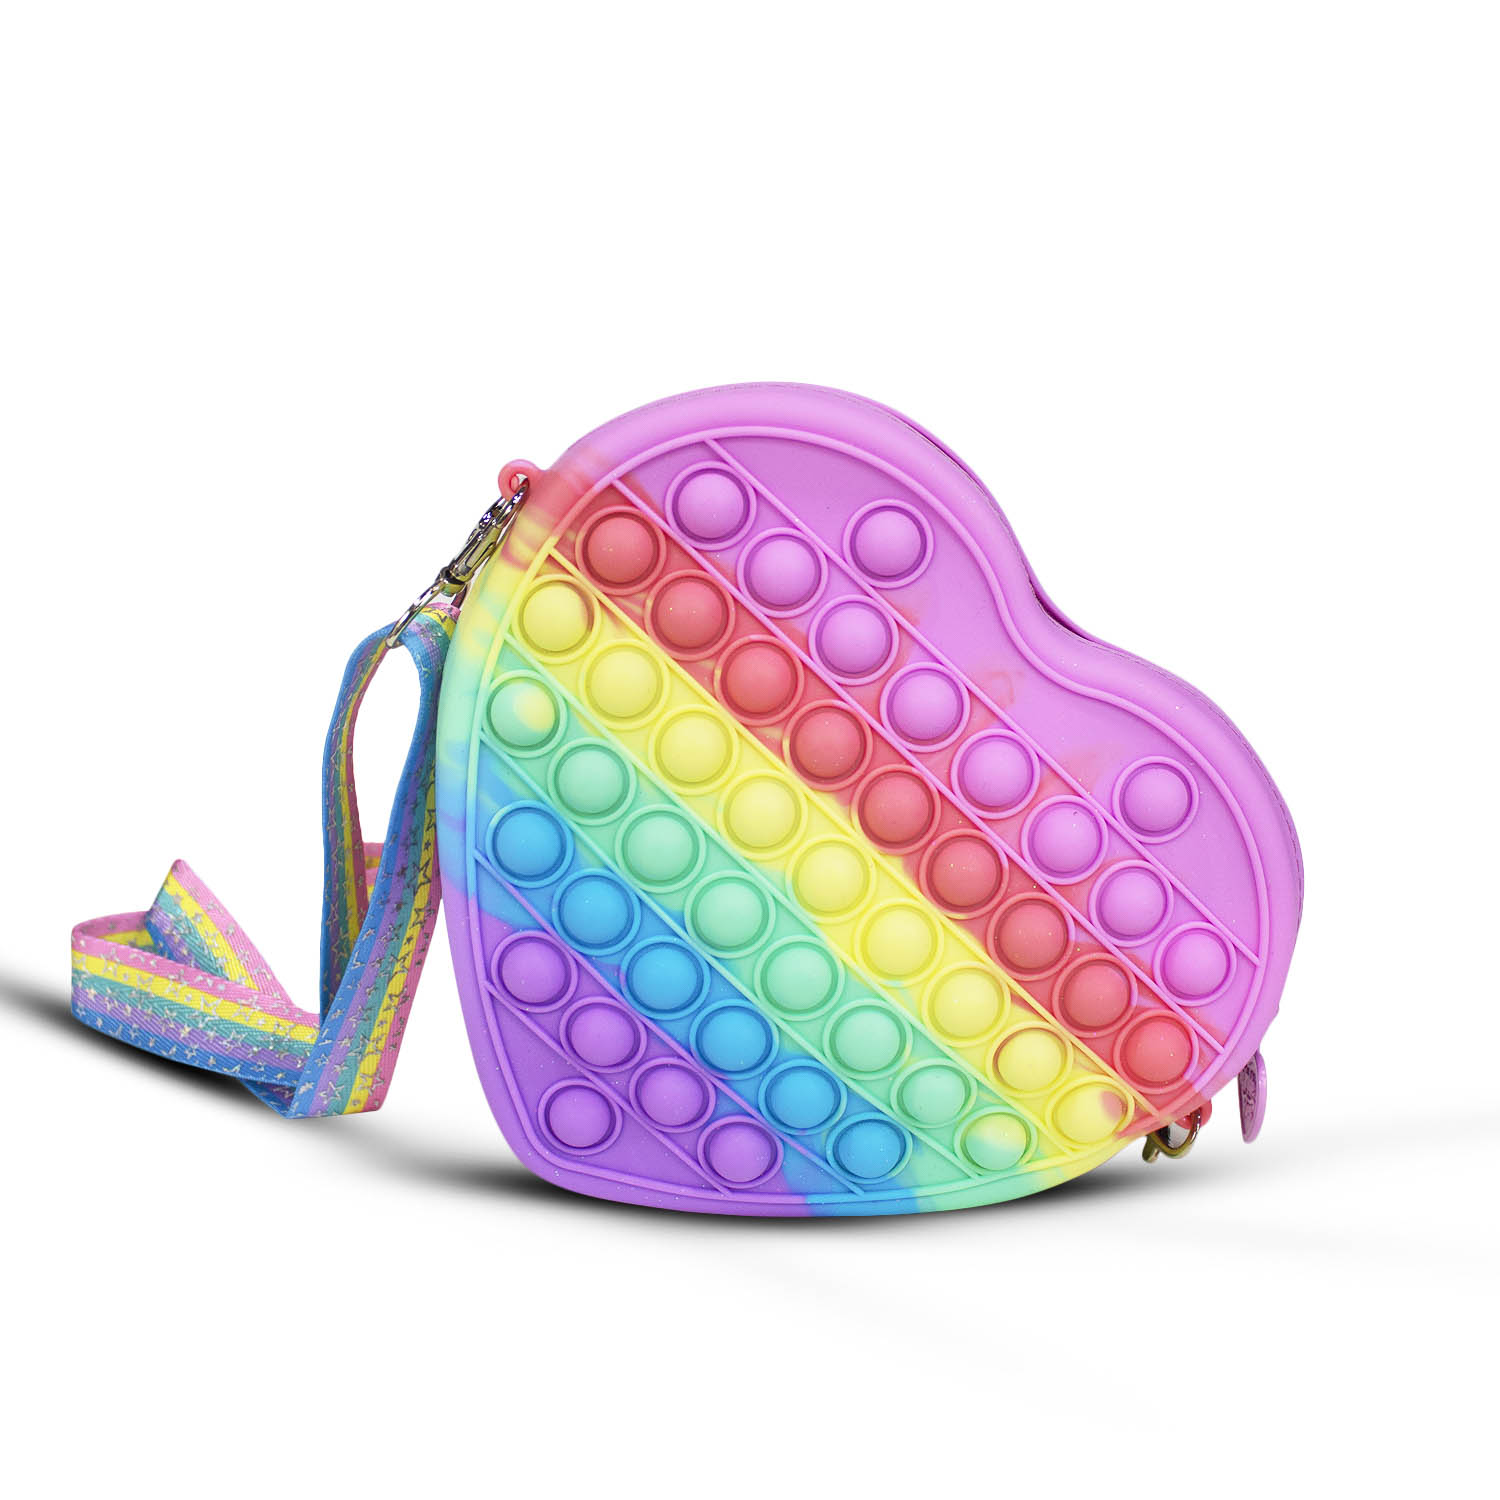 Foto de producto: Glitter hearet pop-it crossbody bag